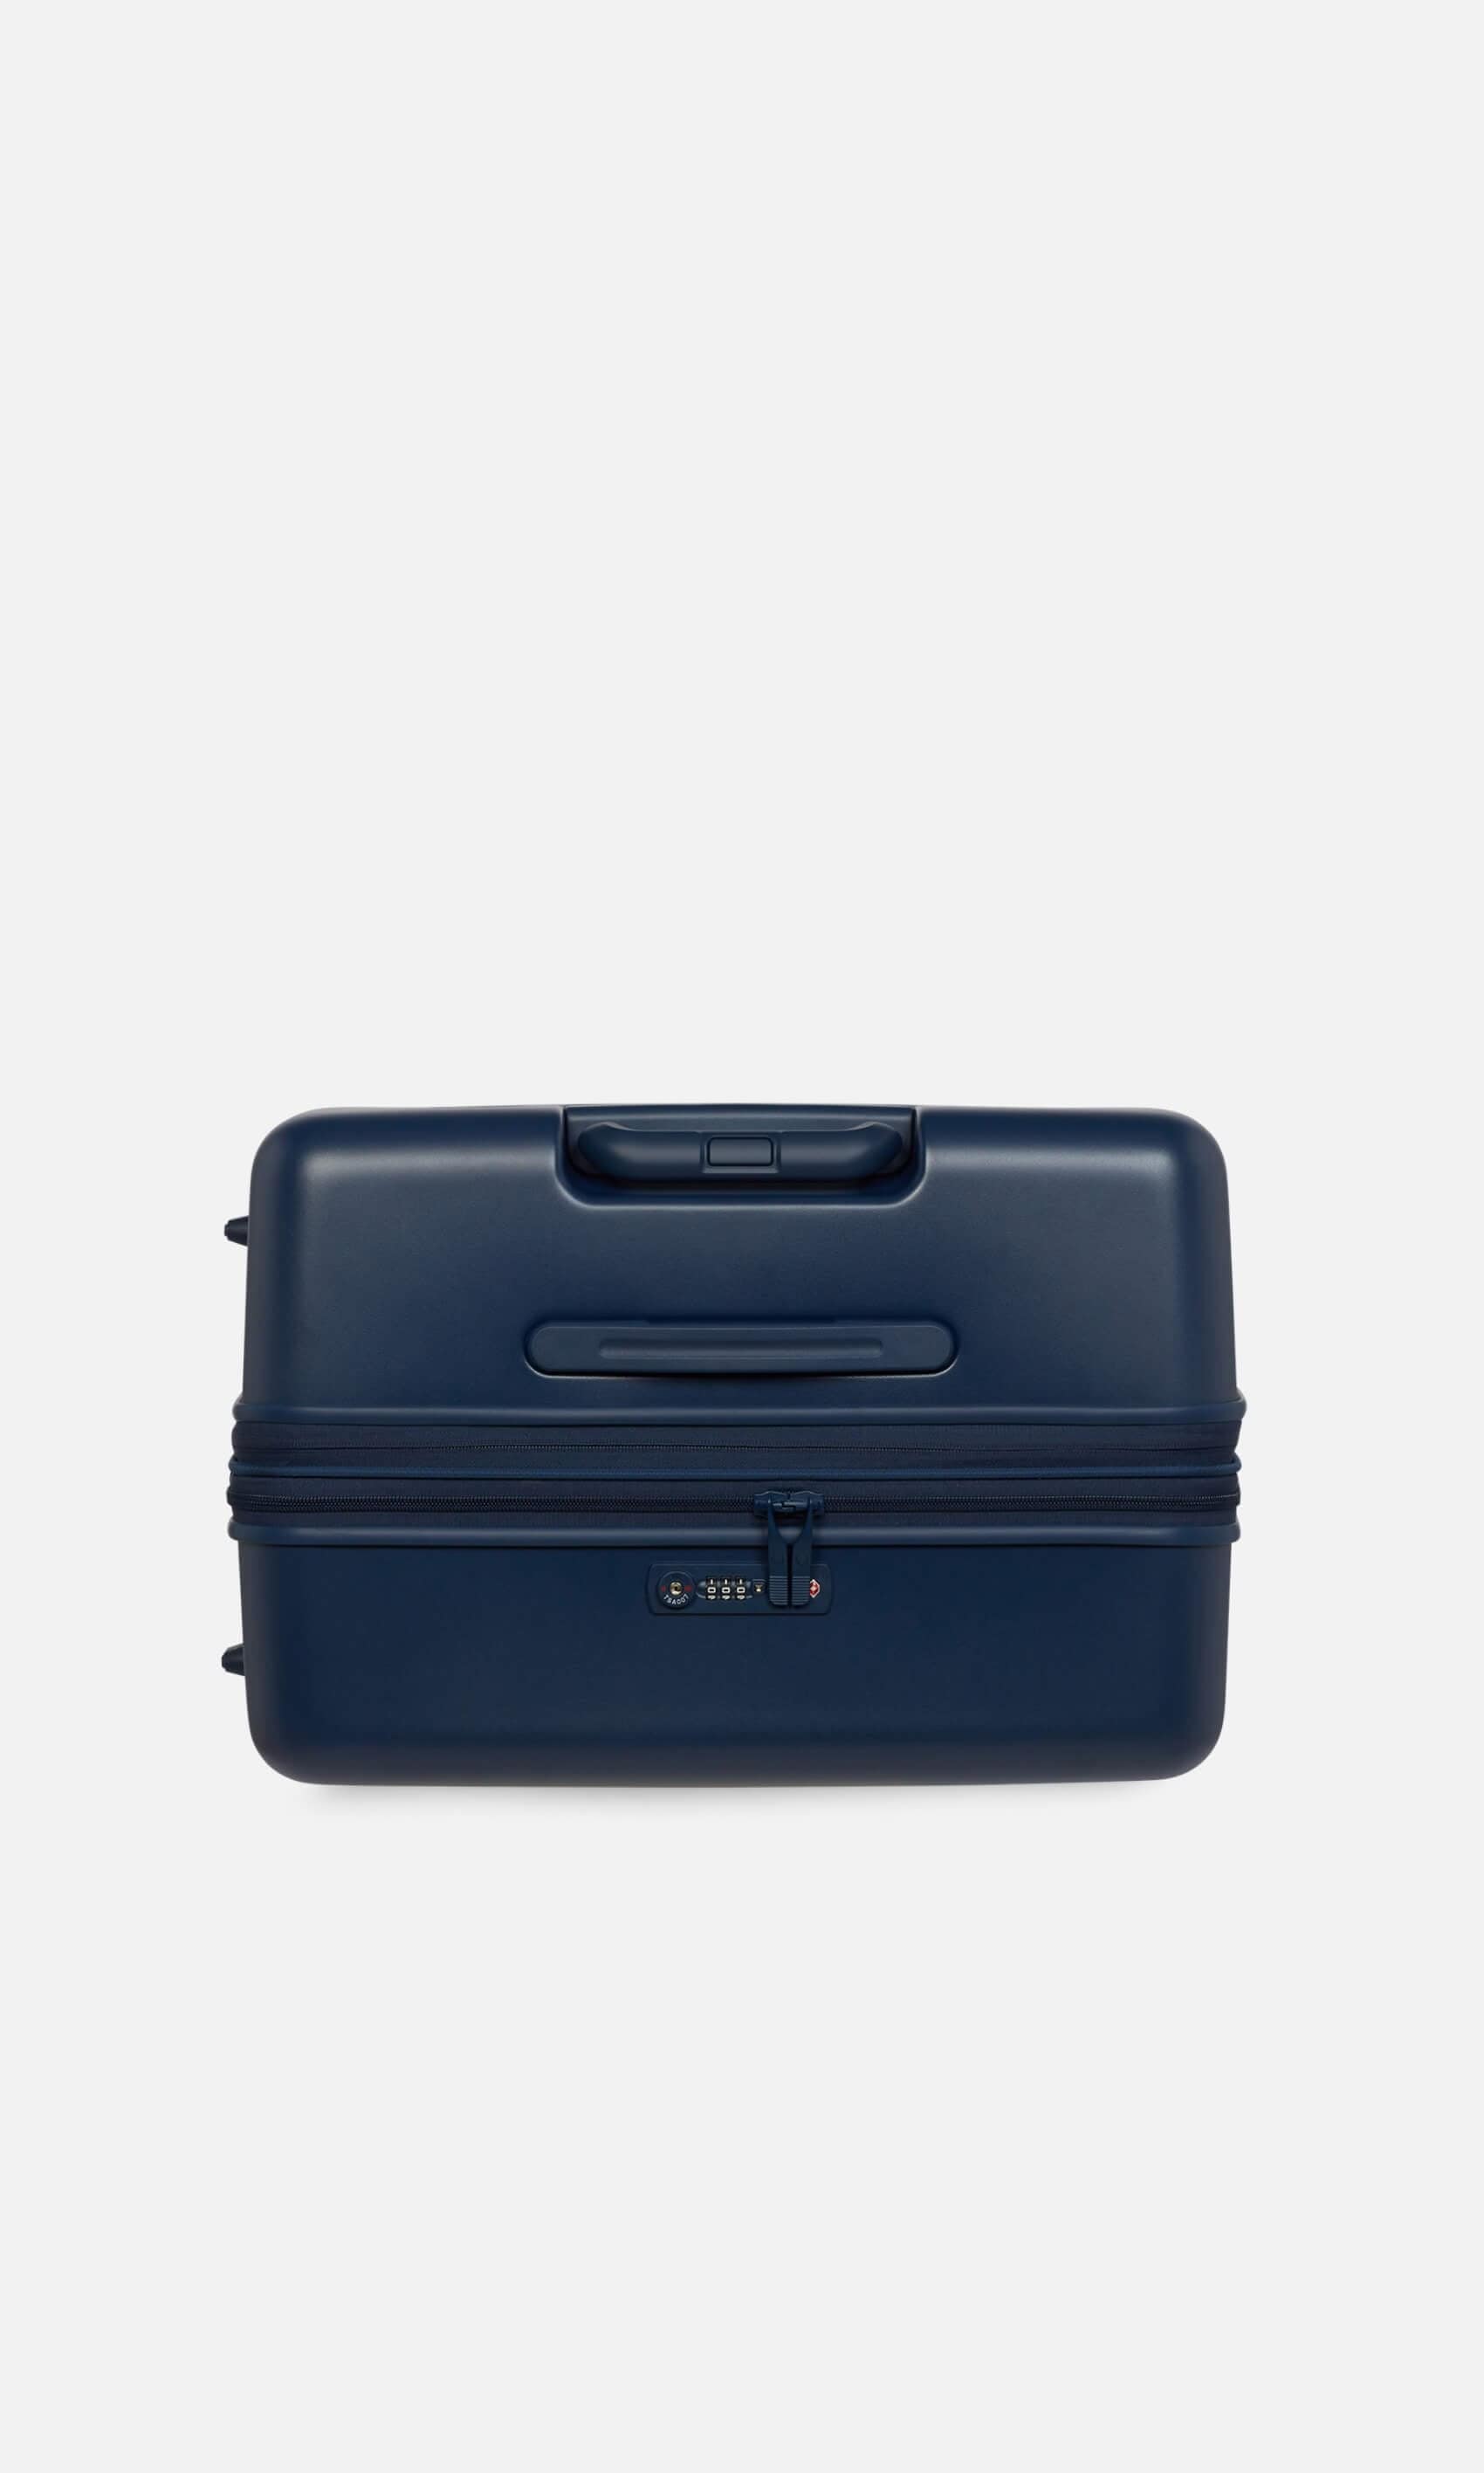 Antler Luggage -  Stamford large in dusk blue - Hard Suitcases Stamford Large Suitcase Blue | Hard Luggage | Antler 